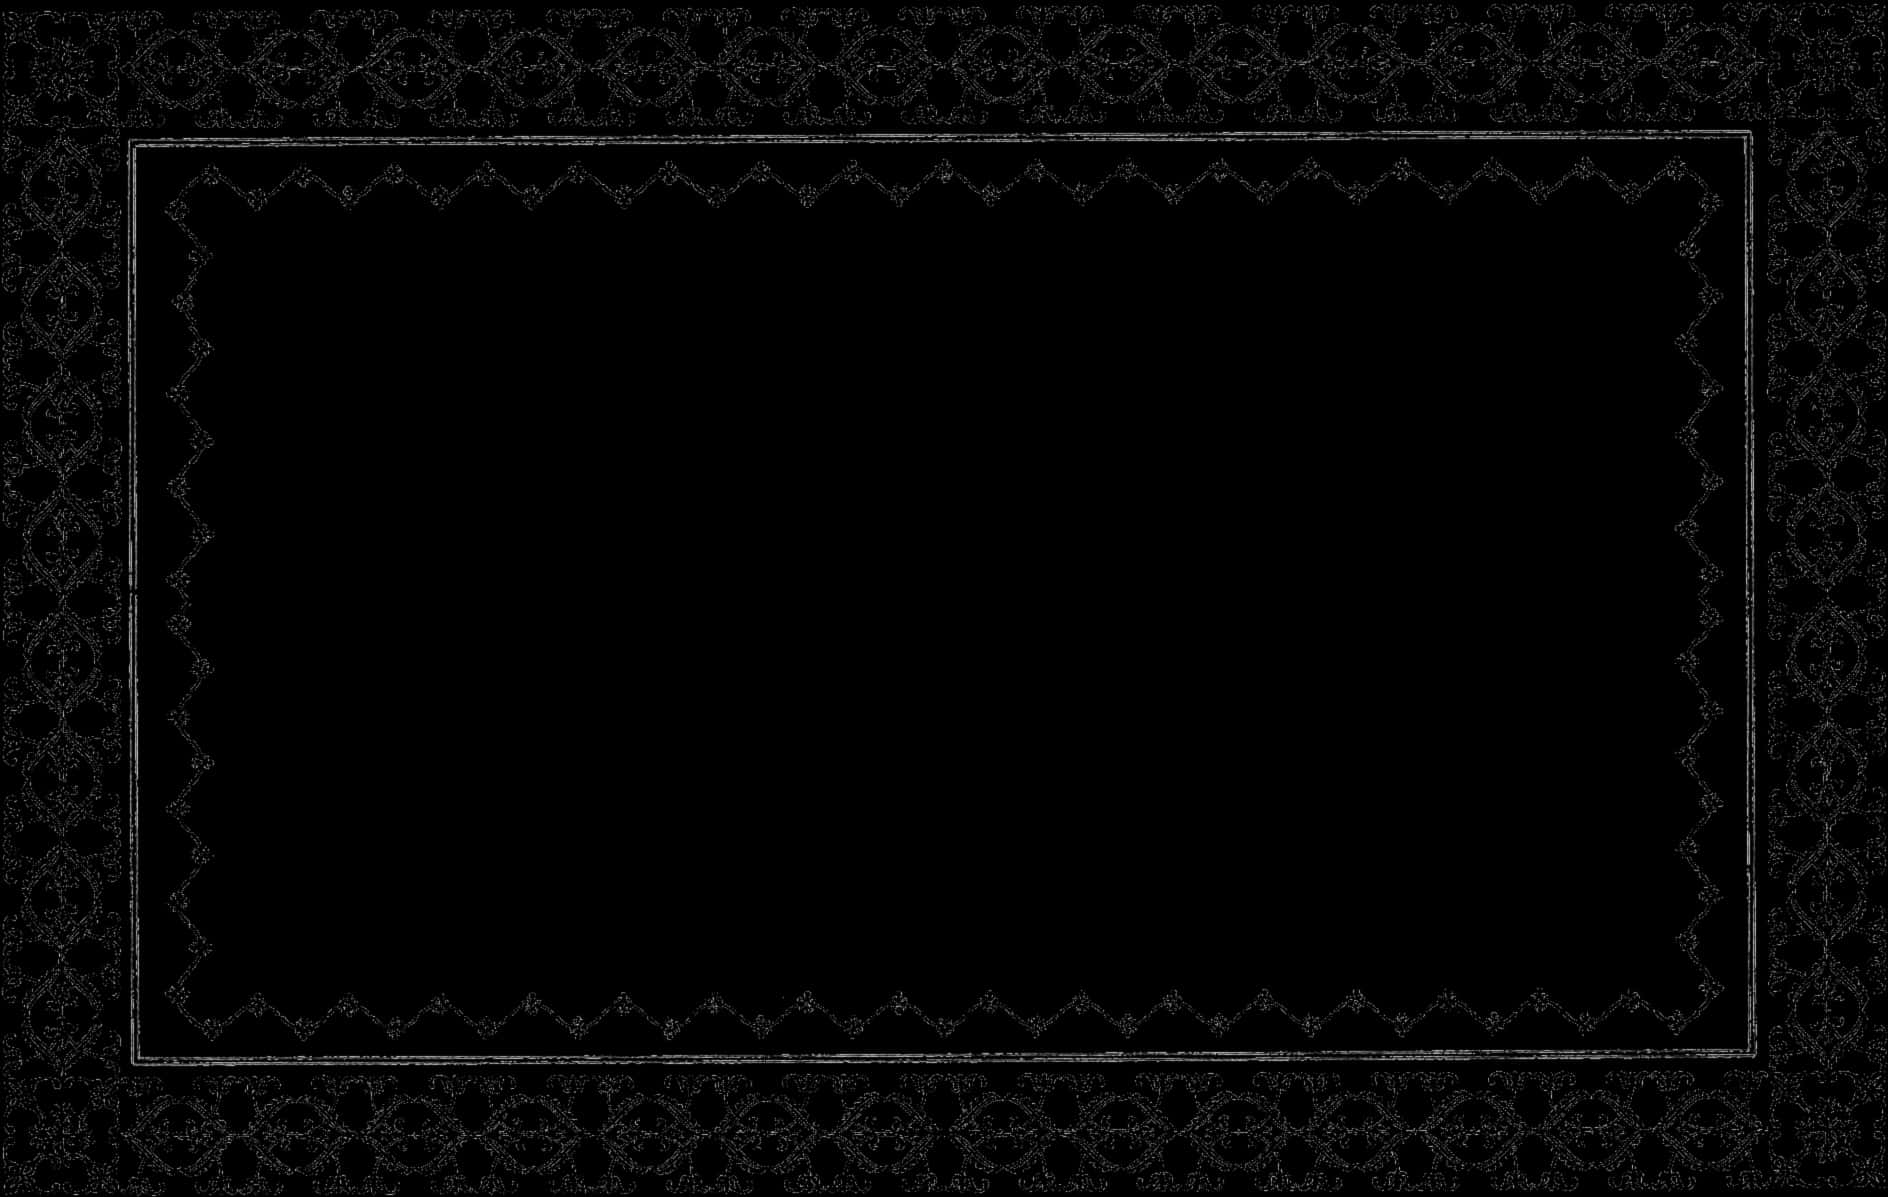 A Black Rectangular Frame With A Black Border